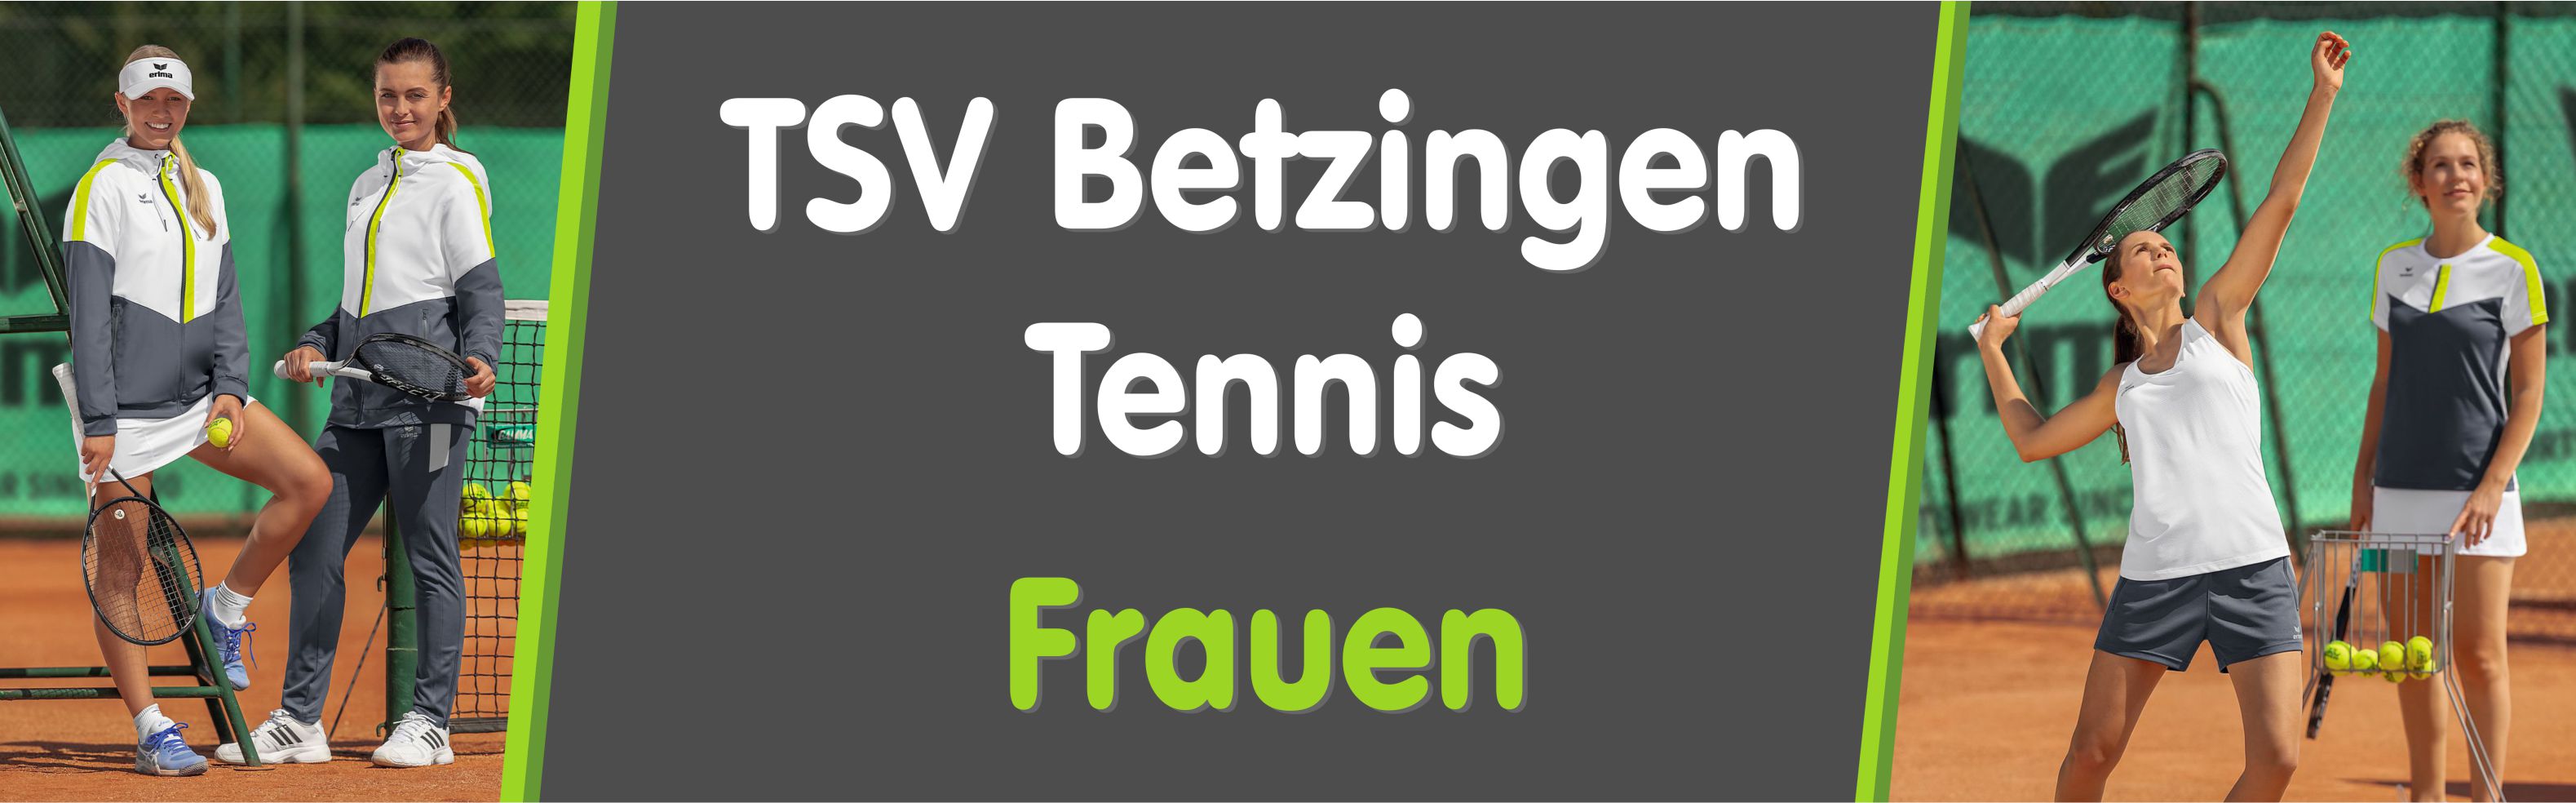 TSV Betzingen Tennis Frauen